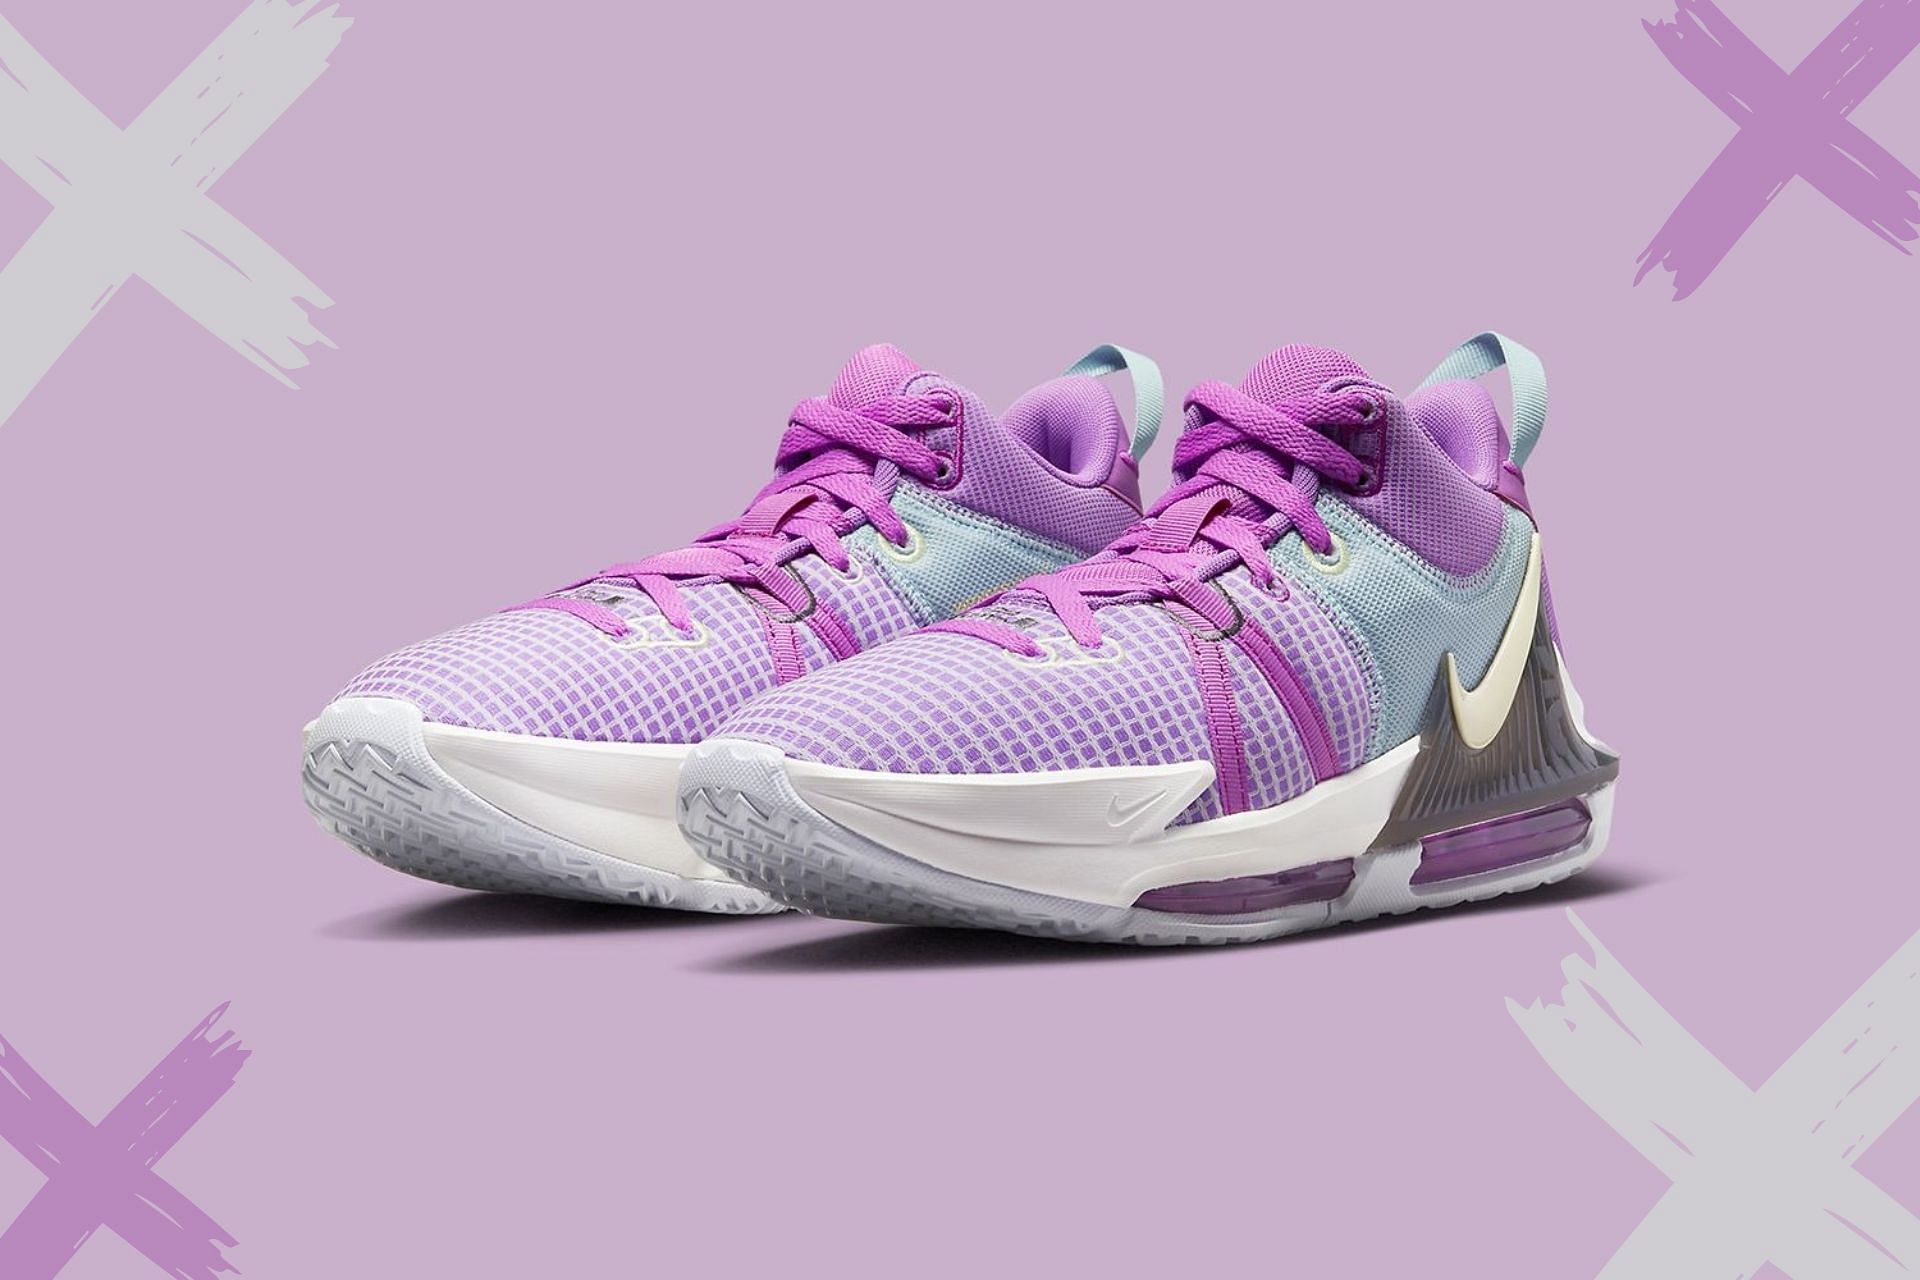 Nike LeBron Witness 7 Purple Pastel colorway (Image via Nike)